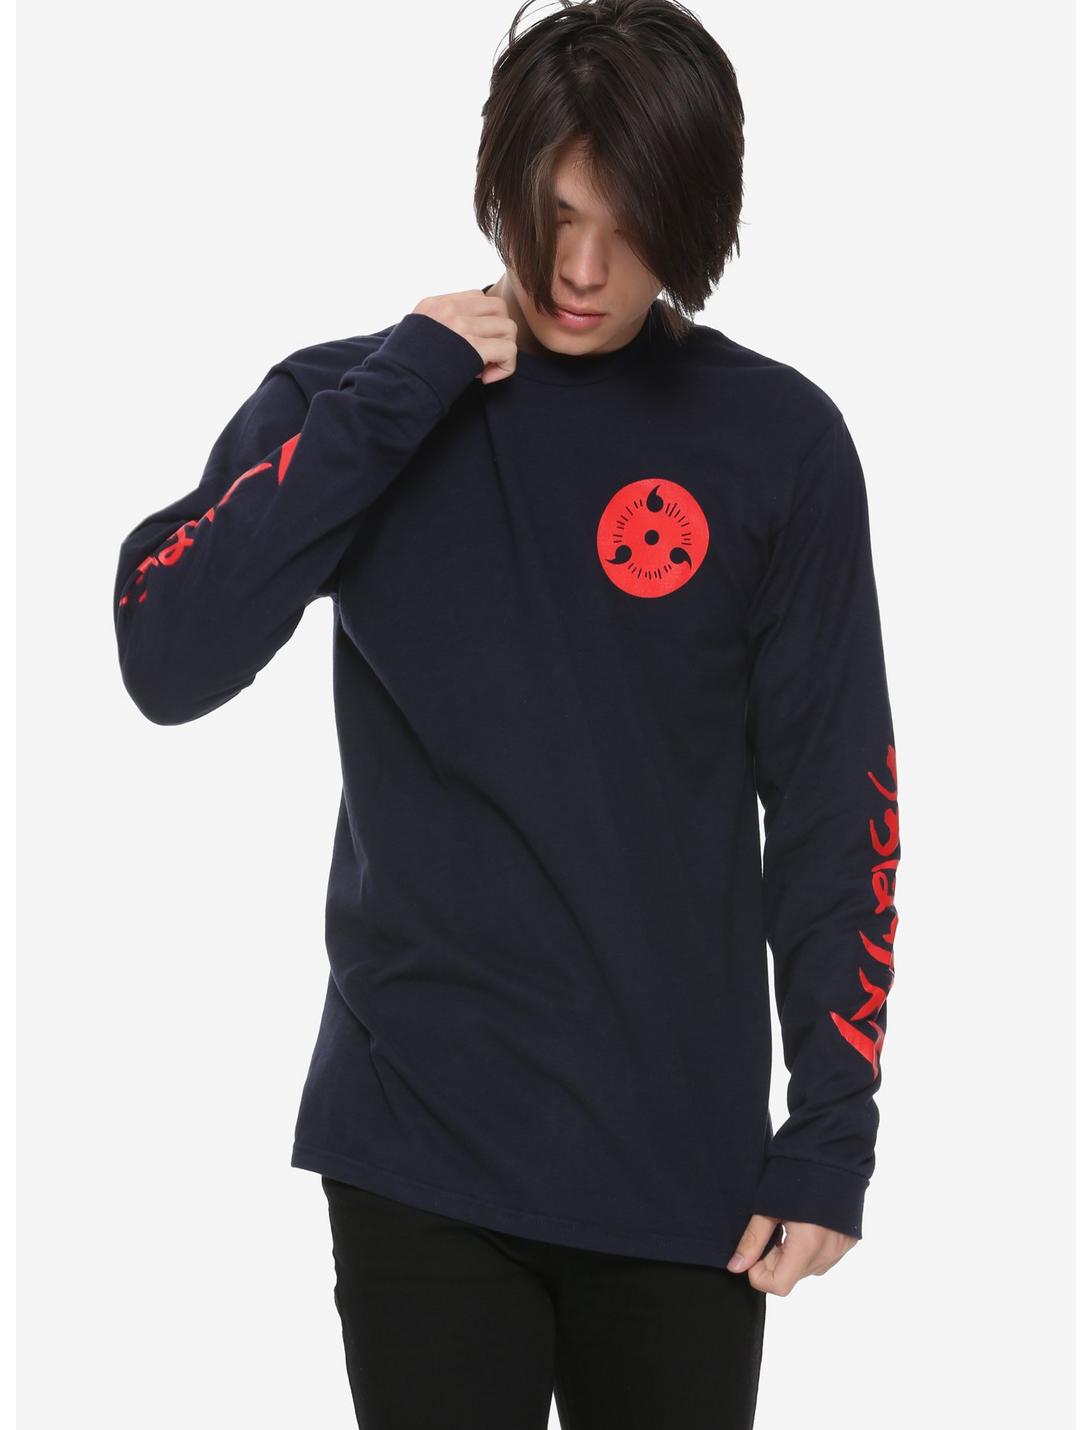 Naruto Shippuden Sasuke Long-Sleeve T-Shirt Hot Topic Exclusive, NAVY, hi-res